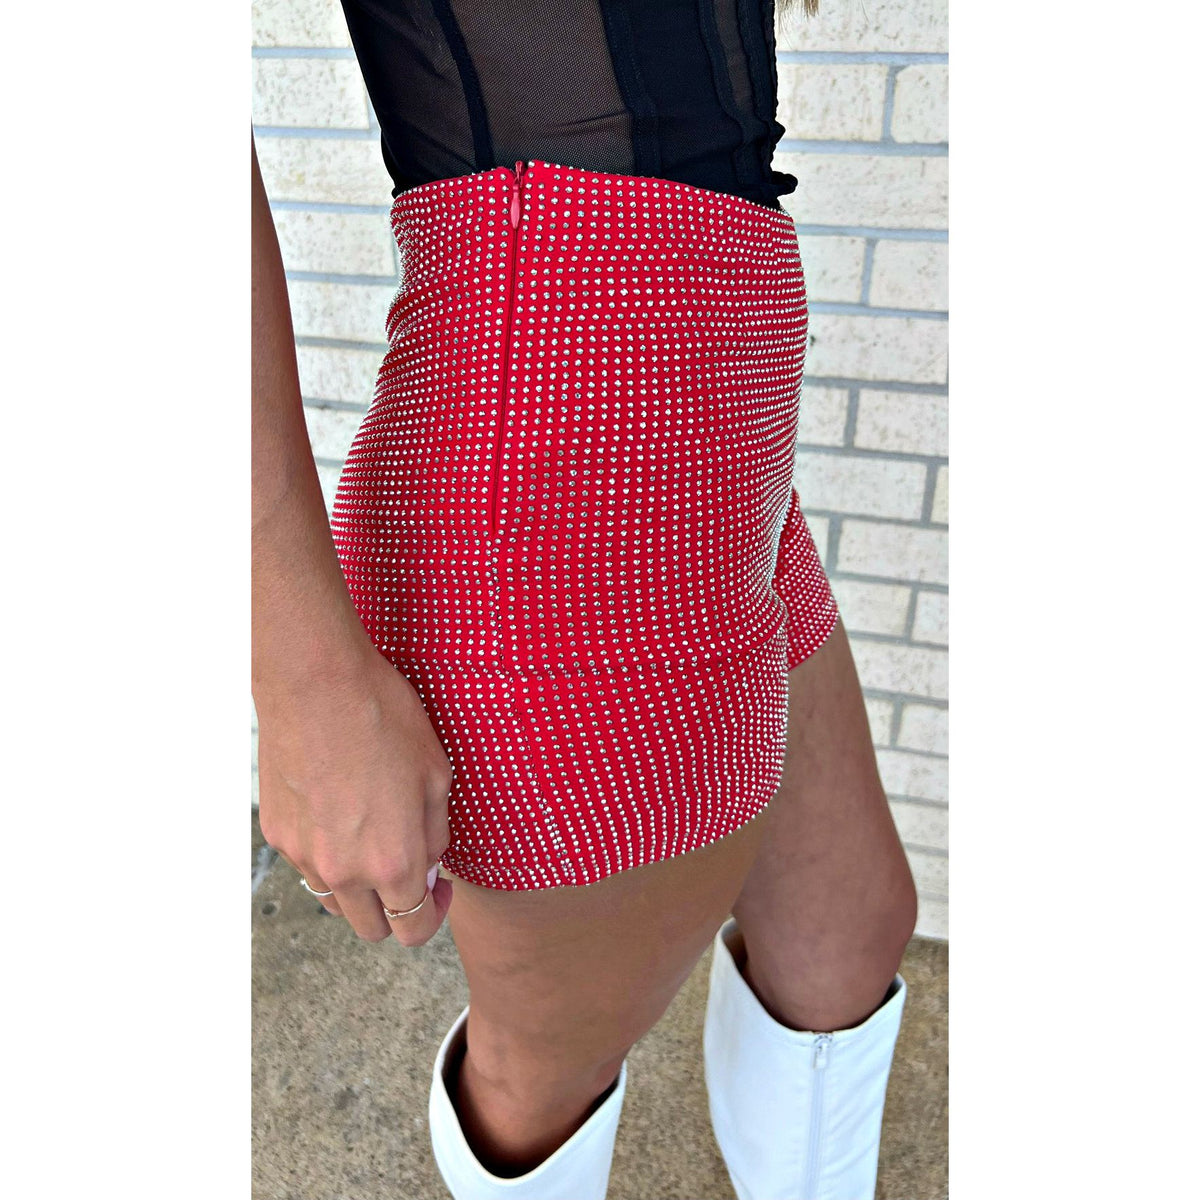 Red Rhinestone Shorts